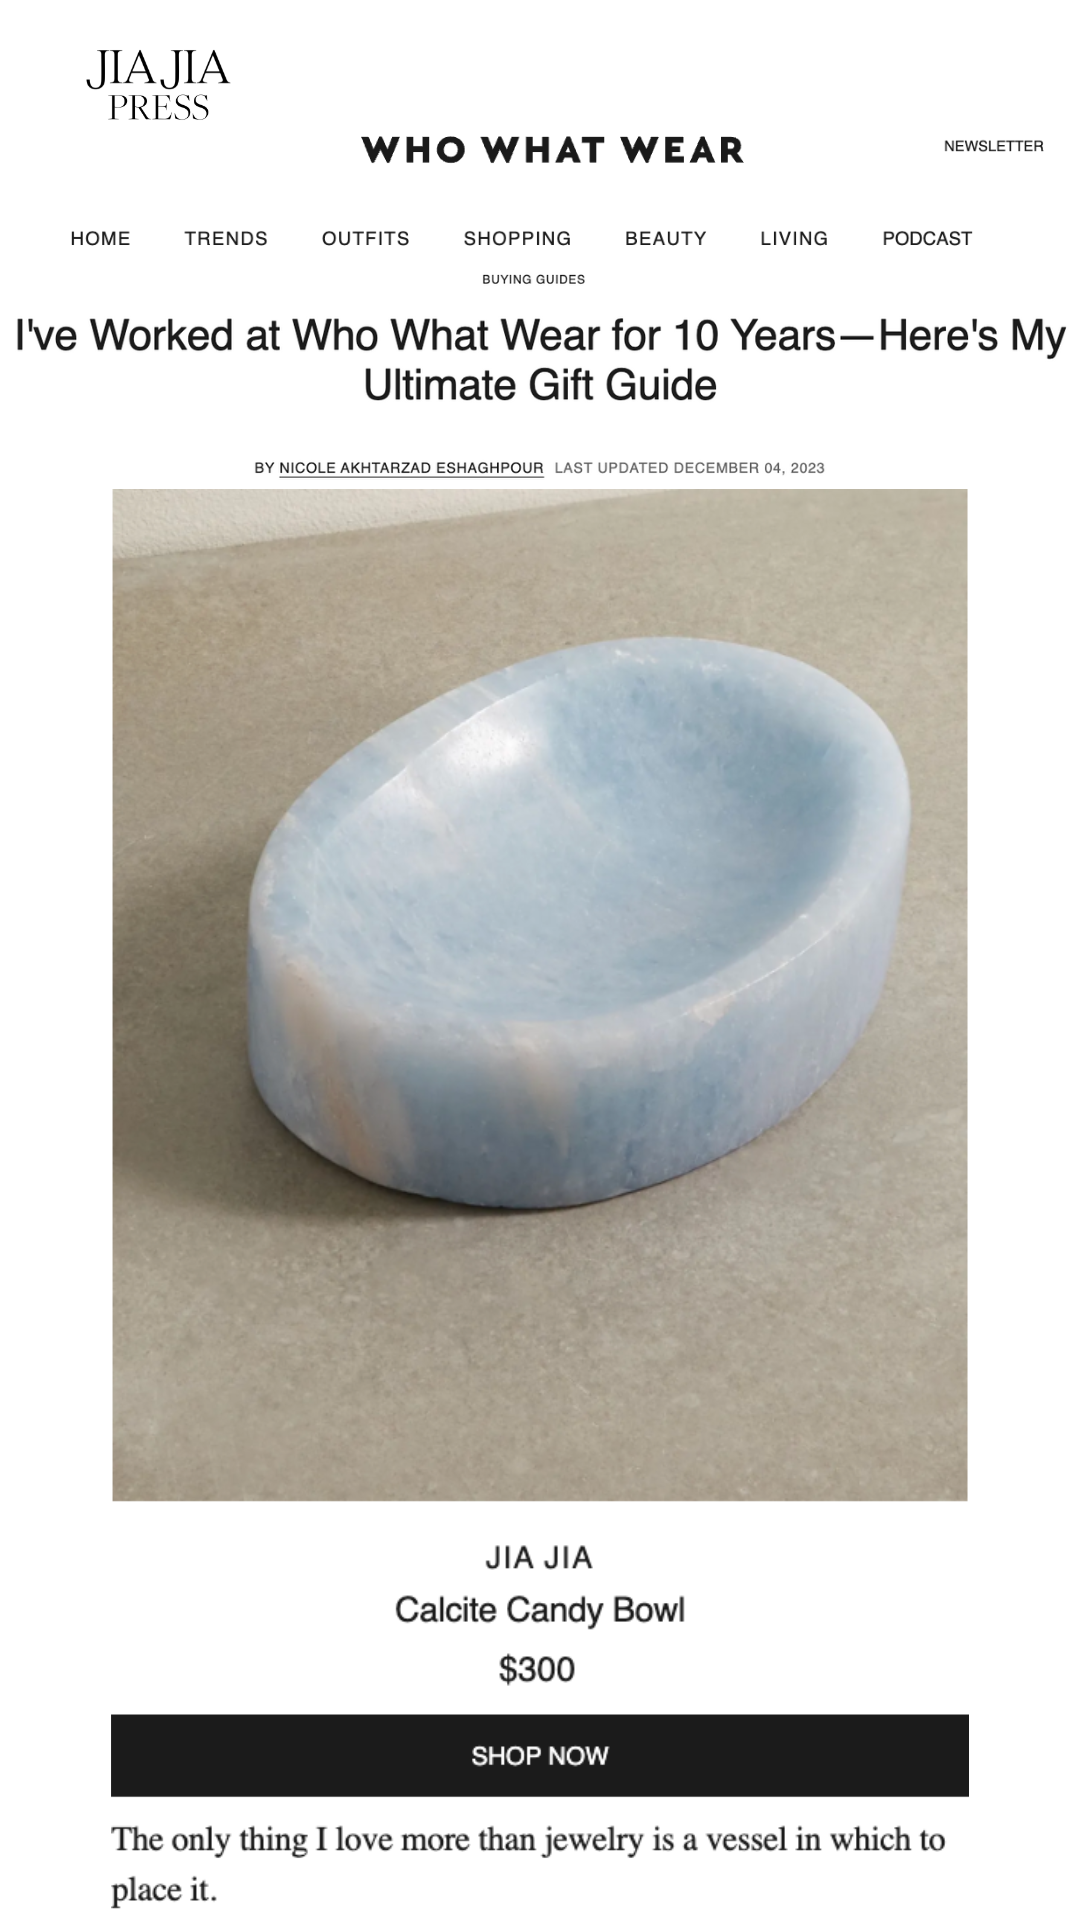 Blue Calcite Candy Bowl